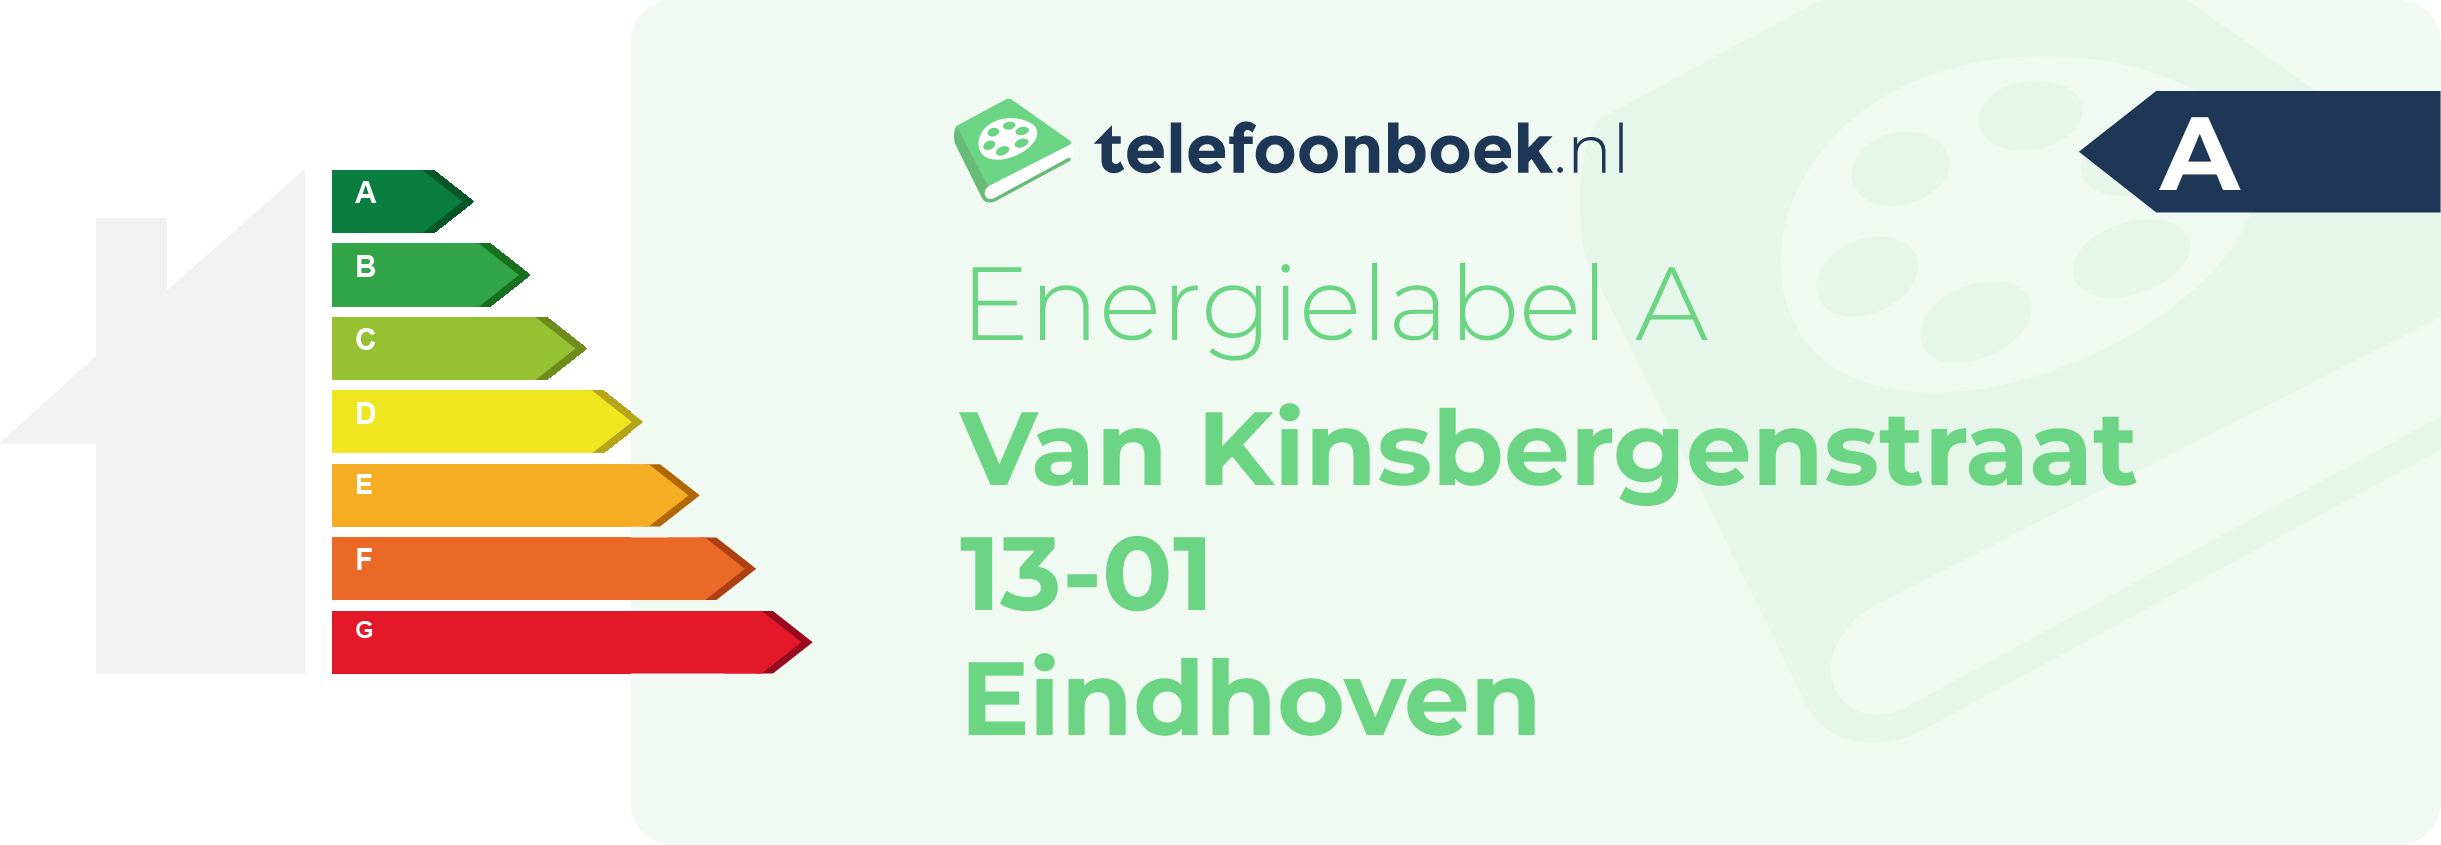 Energielabel Van Kinsbergenstraat 13-01 Eindhoven